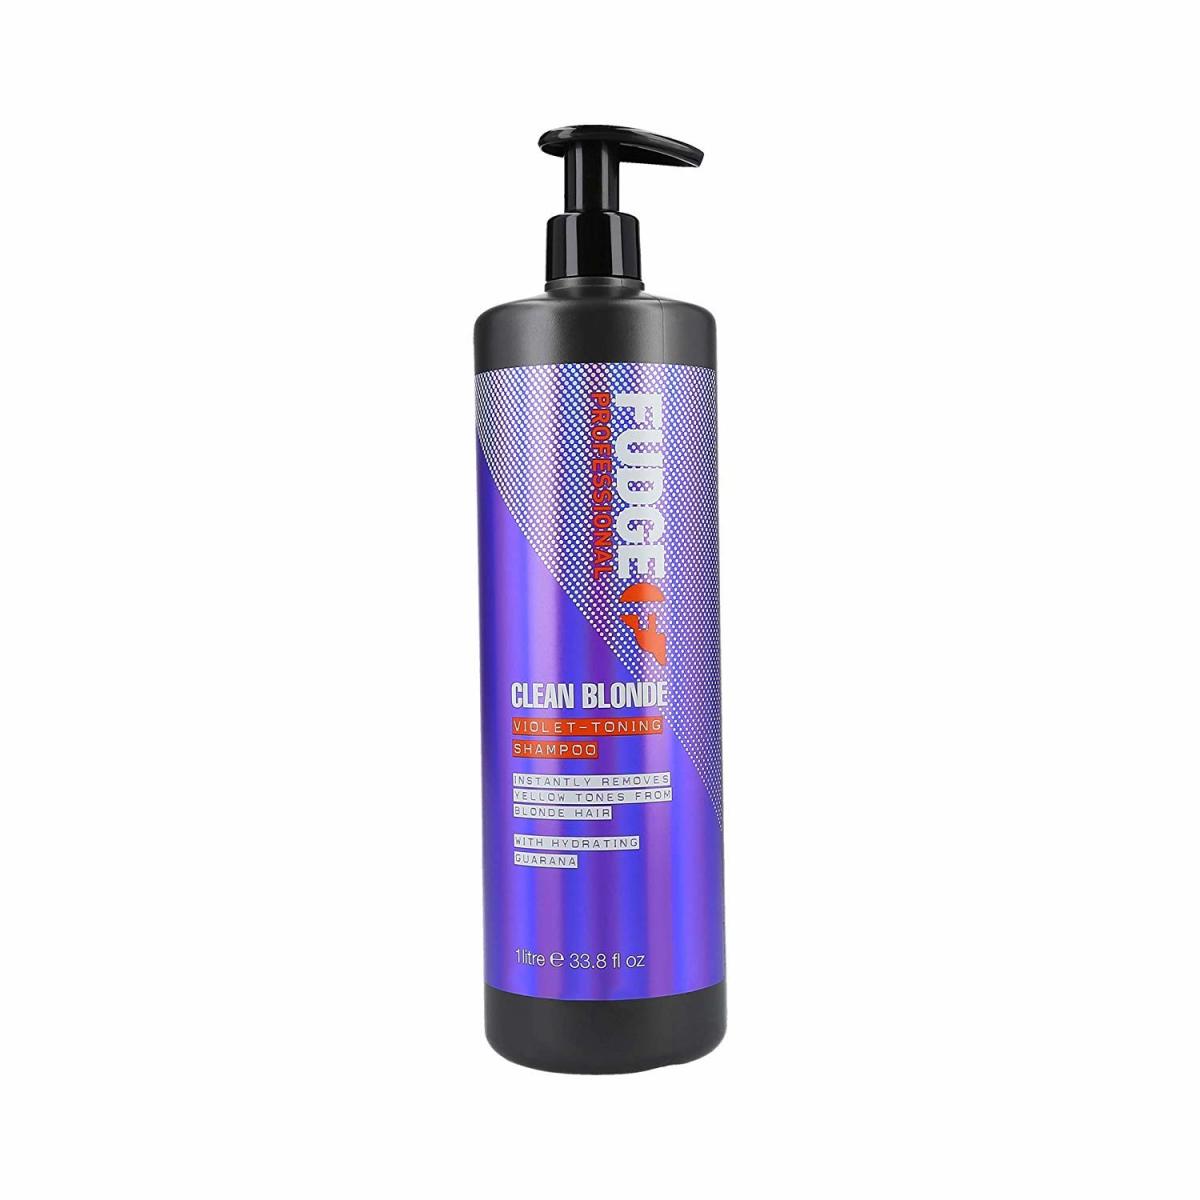 Fudge violet toning shampoo